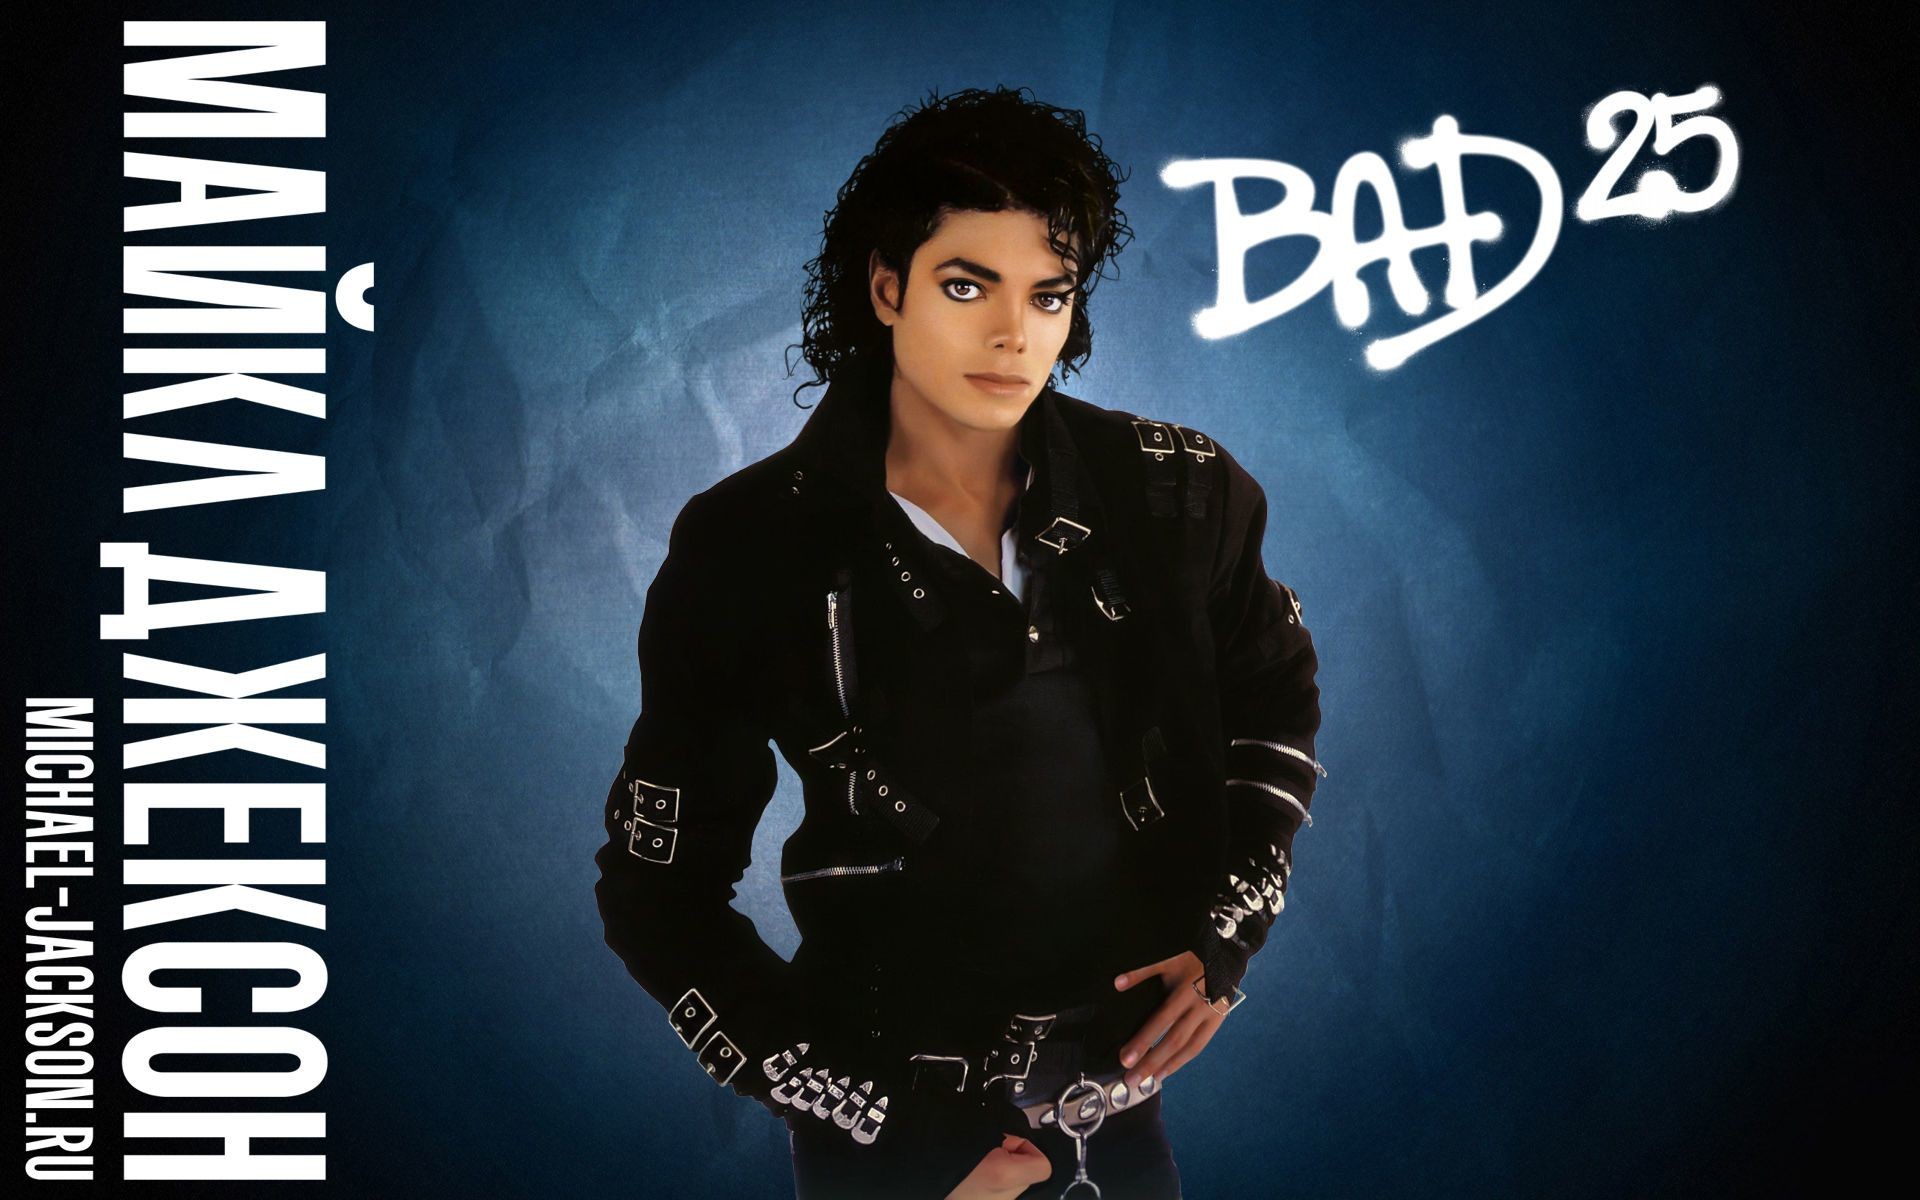 Michael Jackson Wallpaper Bad 72 pictures